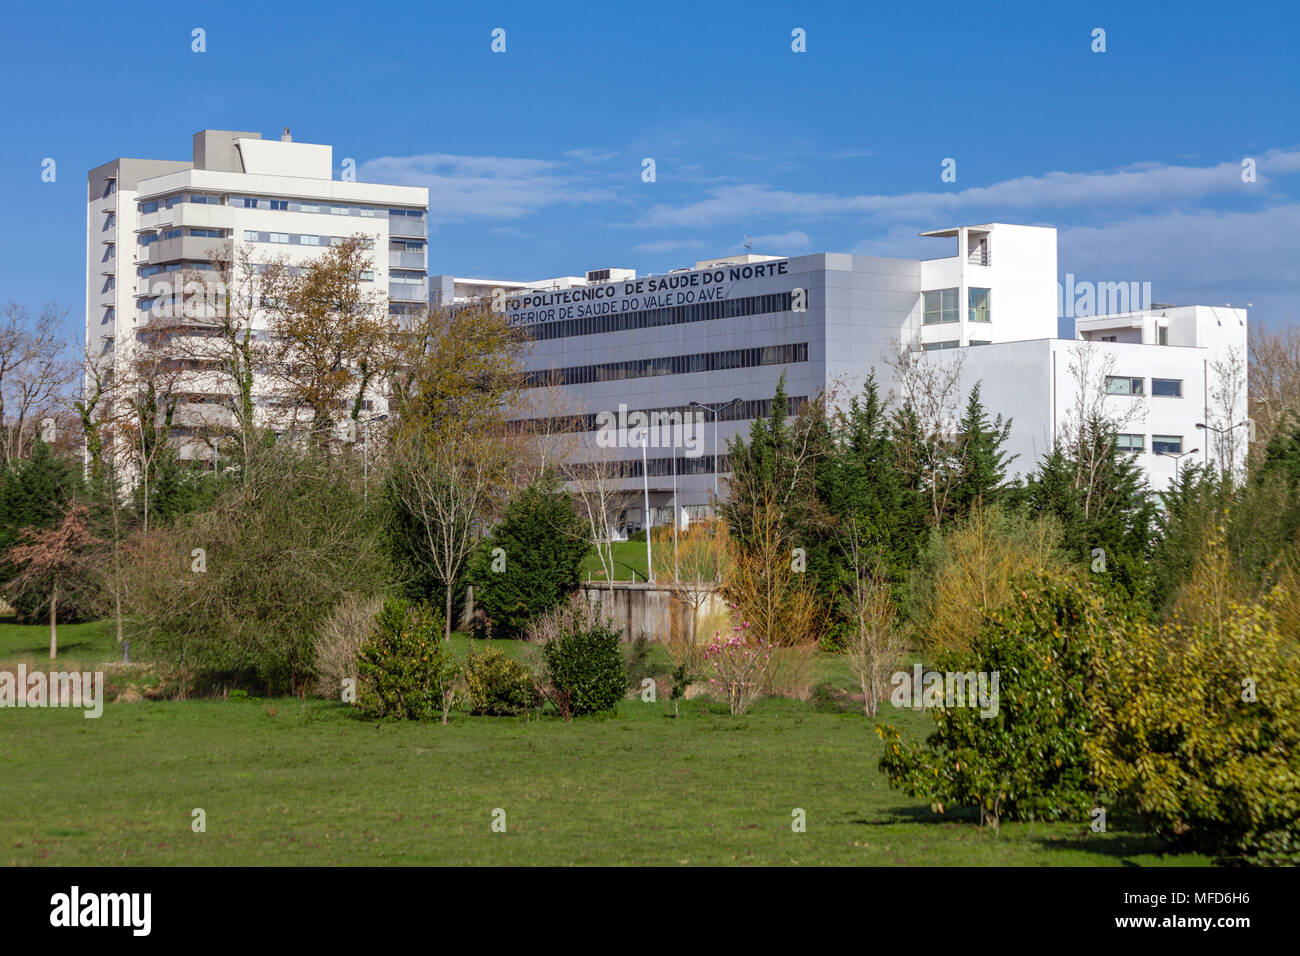 Vila Nova de Famalicão, Portugal. Instituto Politecnico de Saude do Norte, une université des sciences médicales vu de Parque da Devesa parc urbain. Banque D'Images